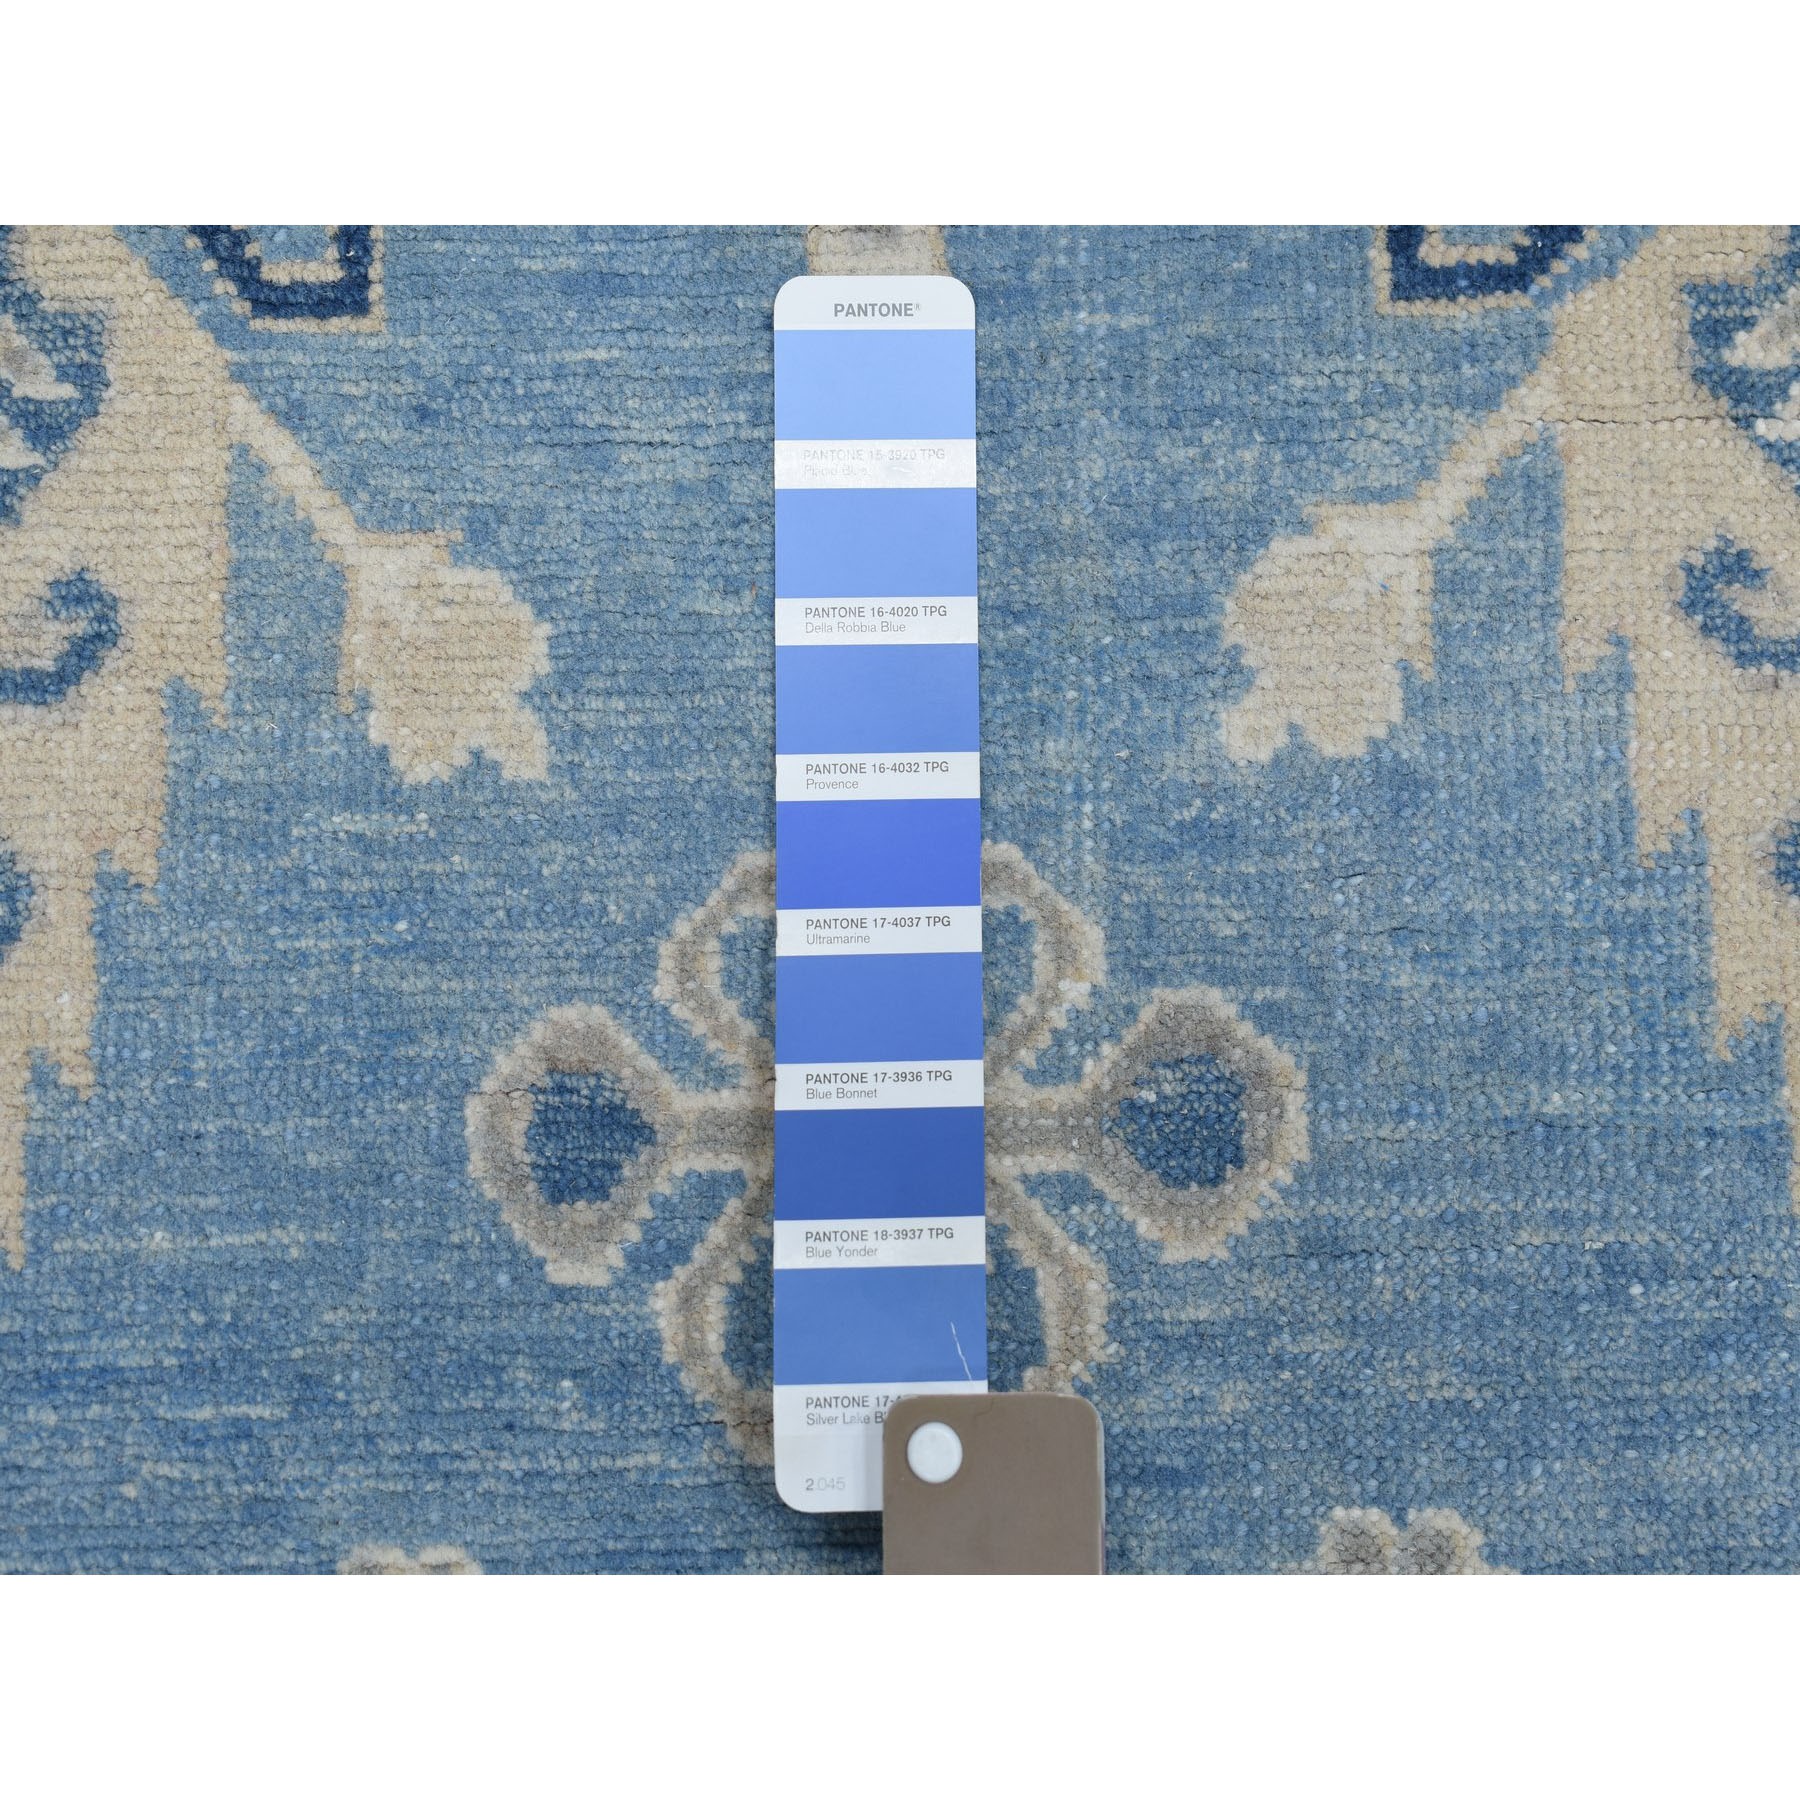 9-1 x11-6  Blue Vintage Look Kazak Pure Wool Hand Knotted Oriental Rug 